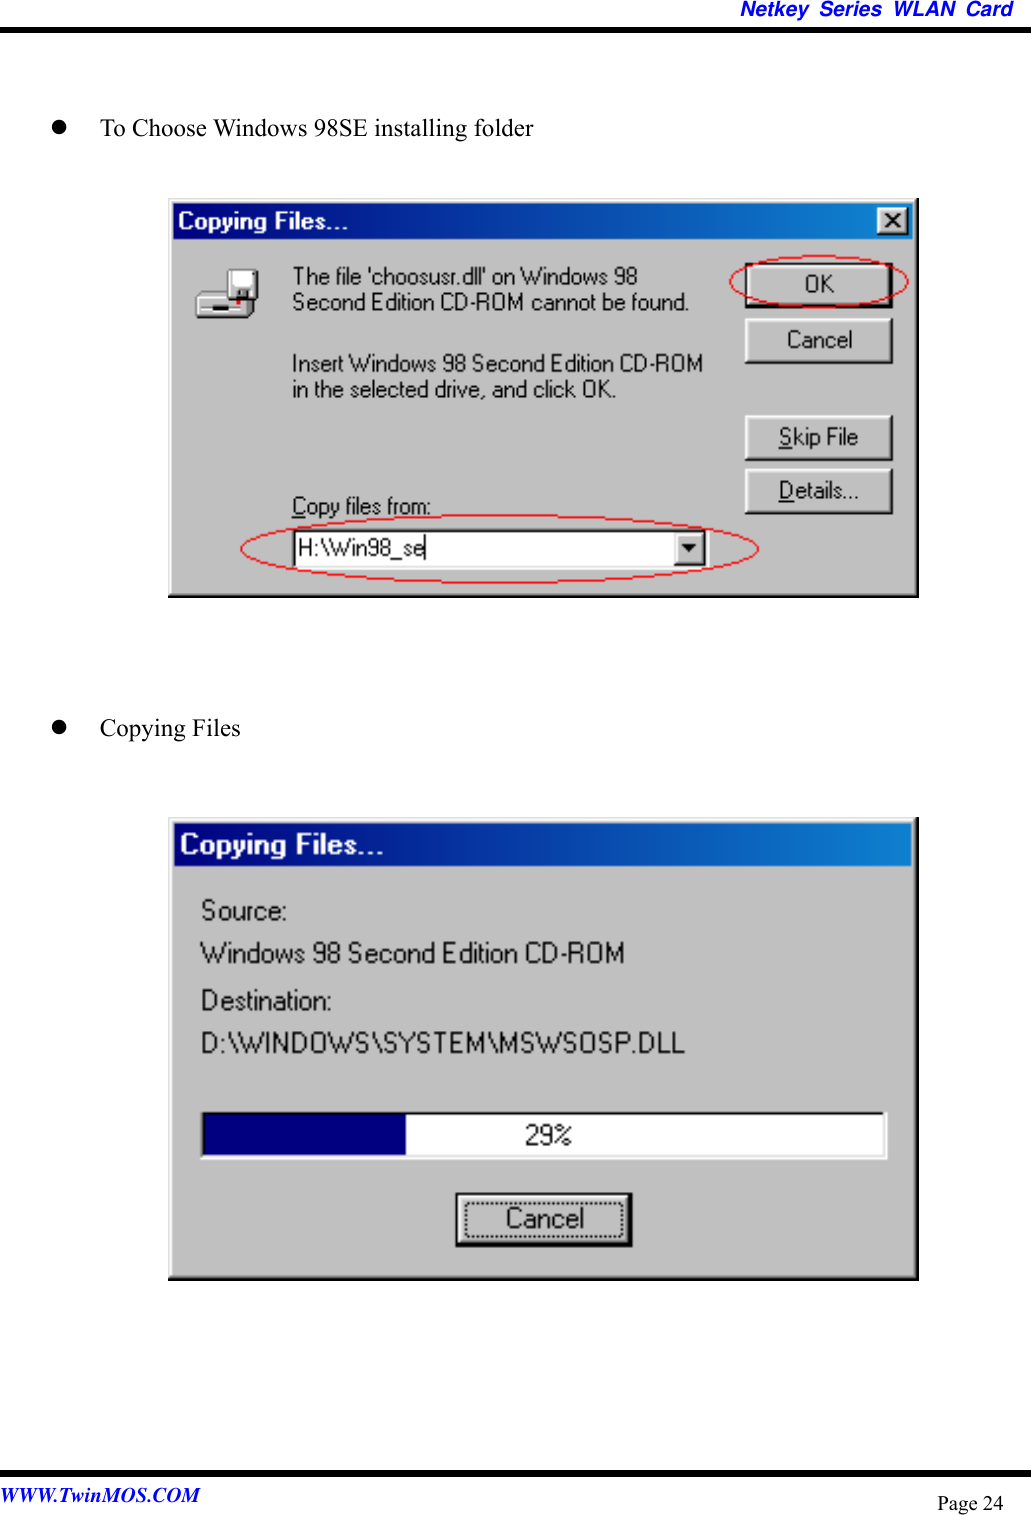   Netkey Series WLAN Card     To Choose Windows 98SE installing folder                  Copying Files                    WWW.TwinMOS.COM  Page 24